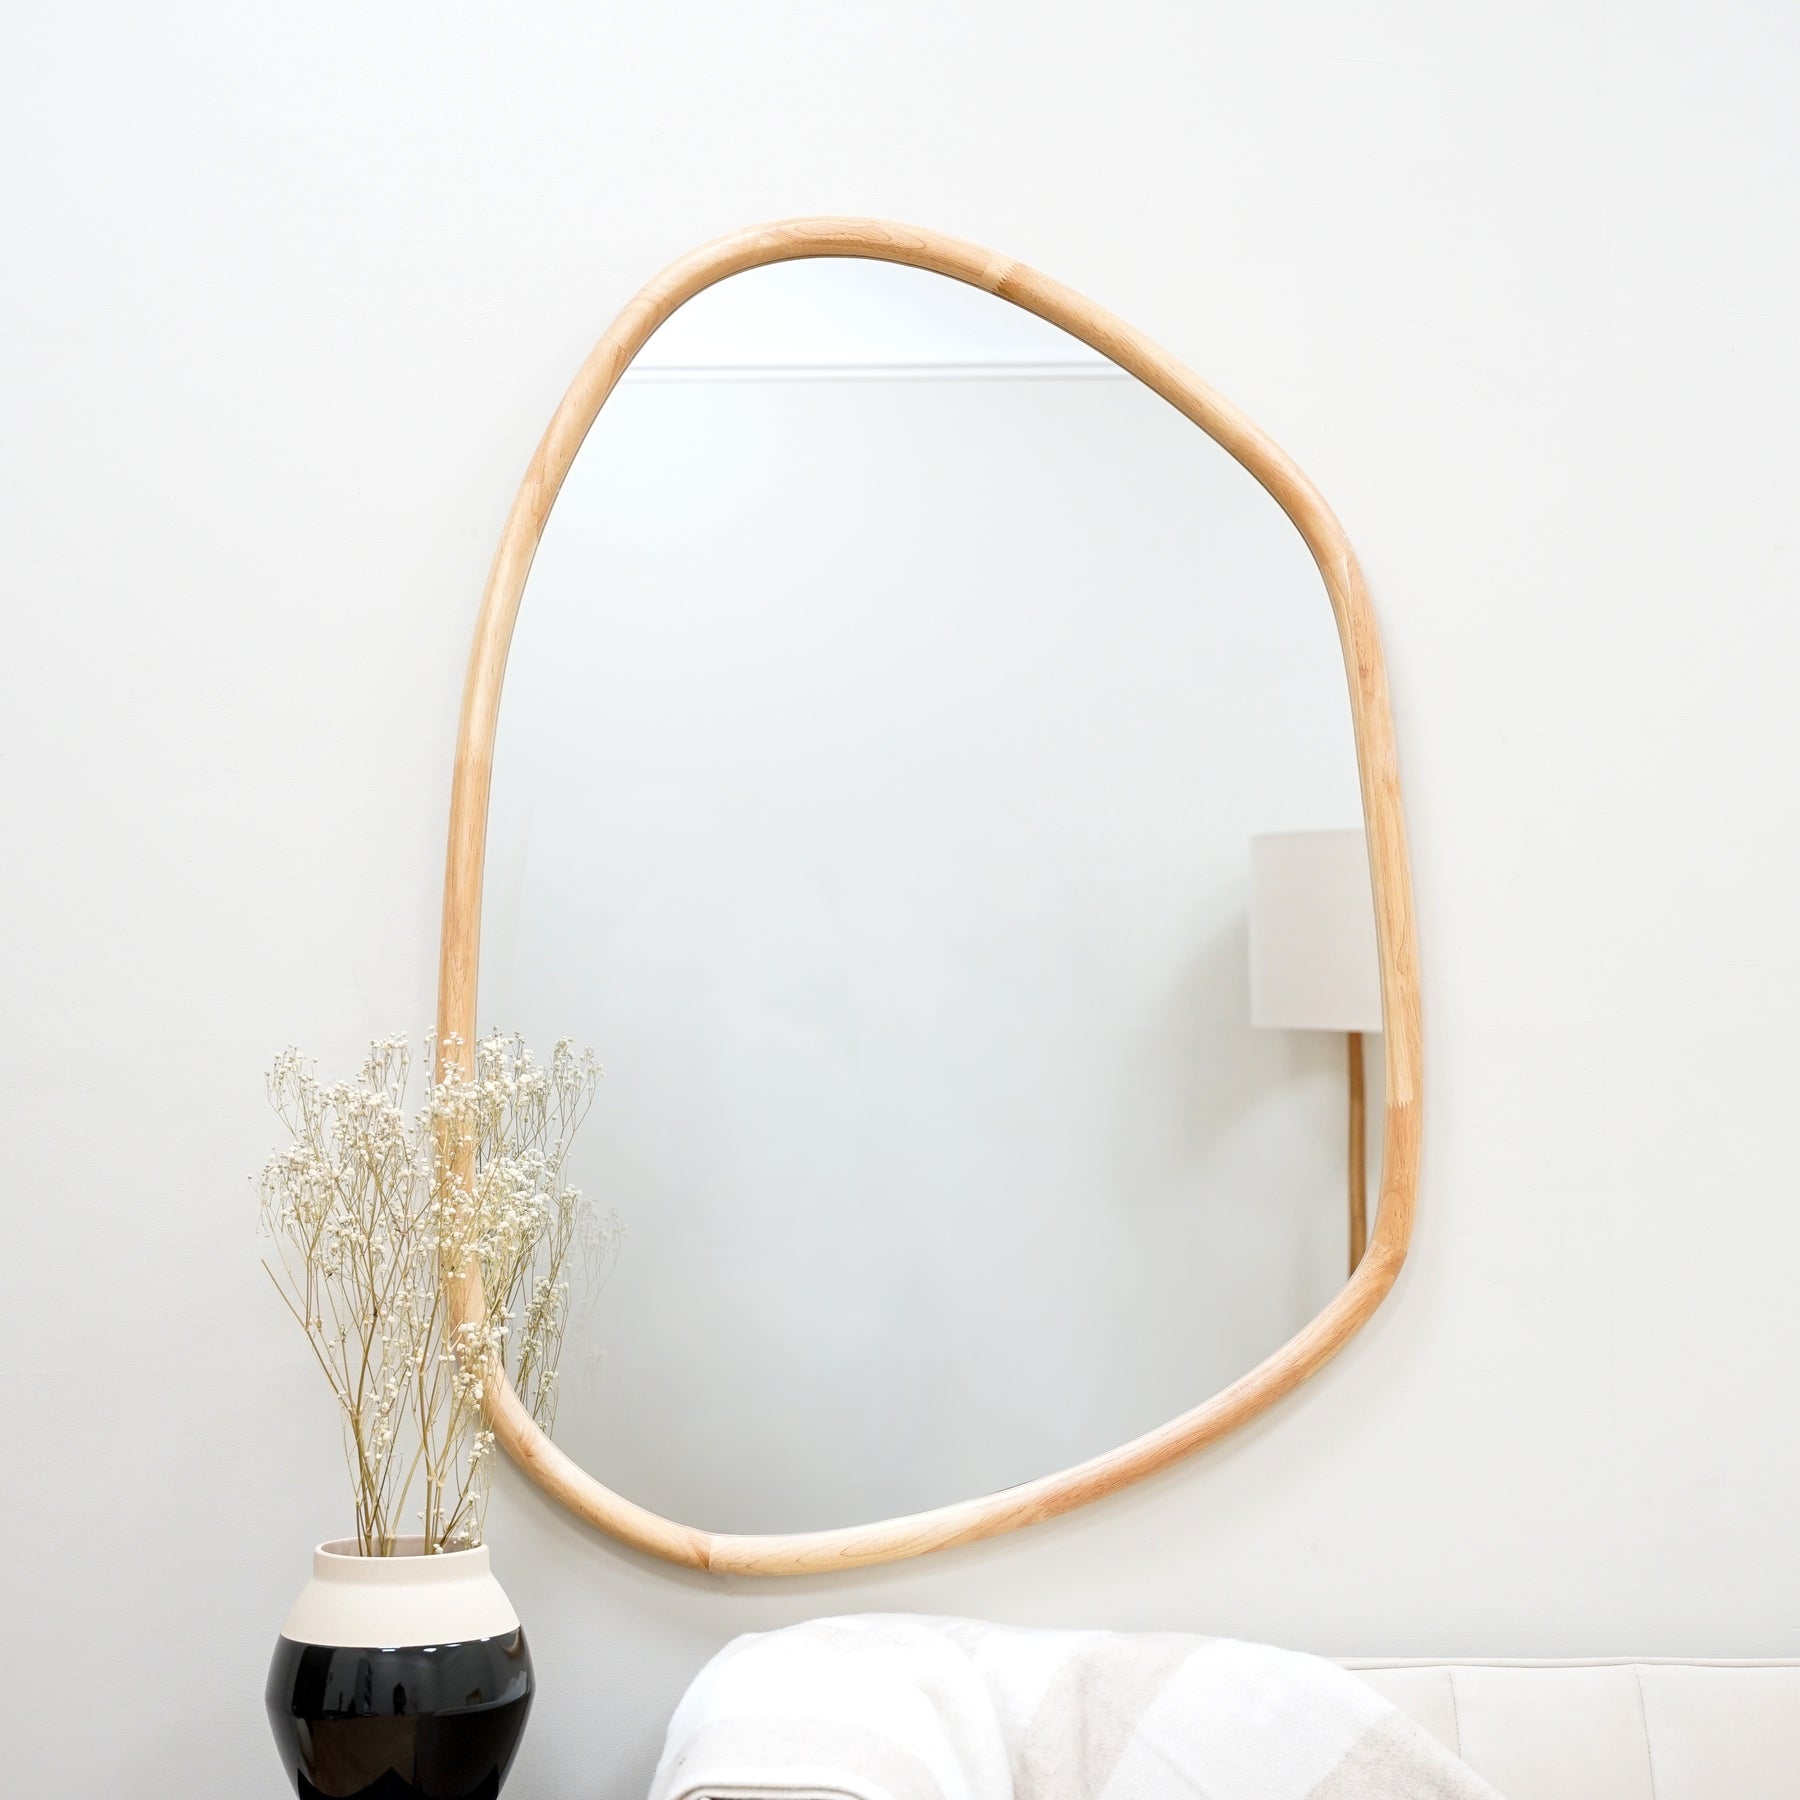 Organic irregular natural-coloured wooden wall mirror displayed vertically